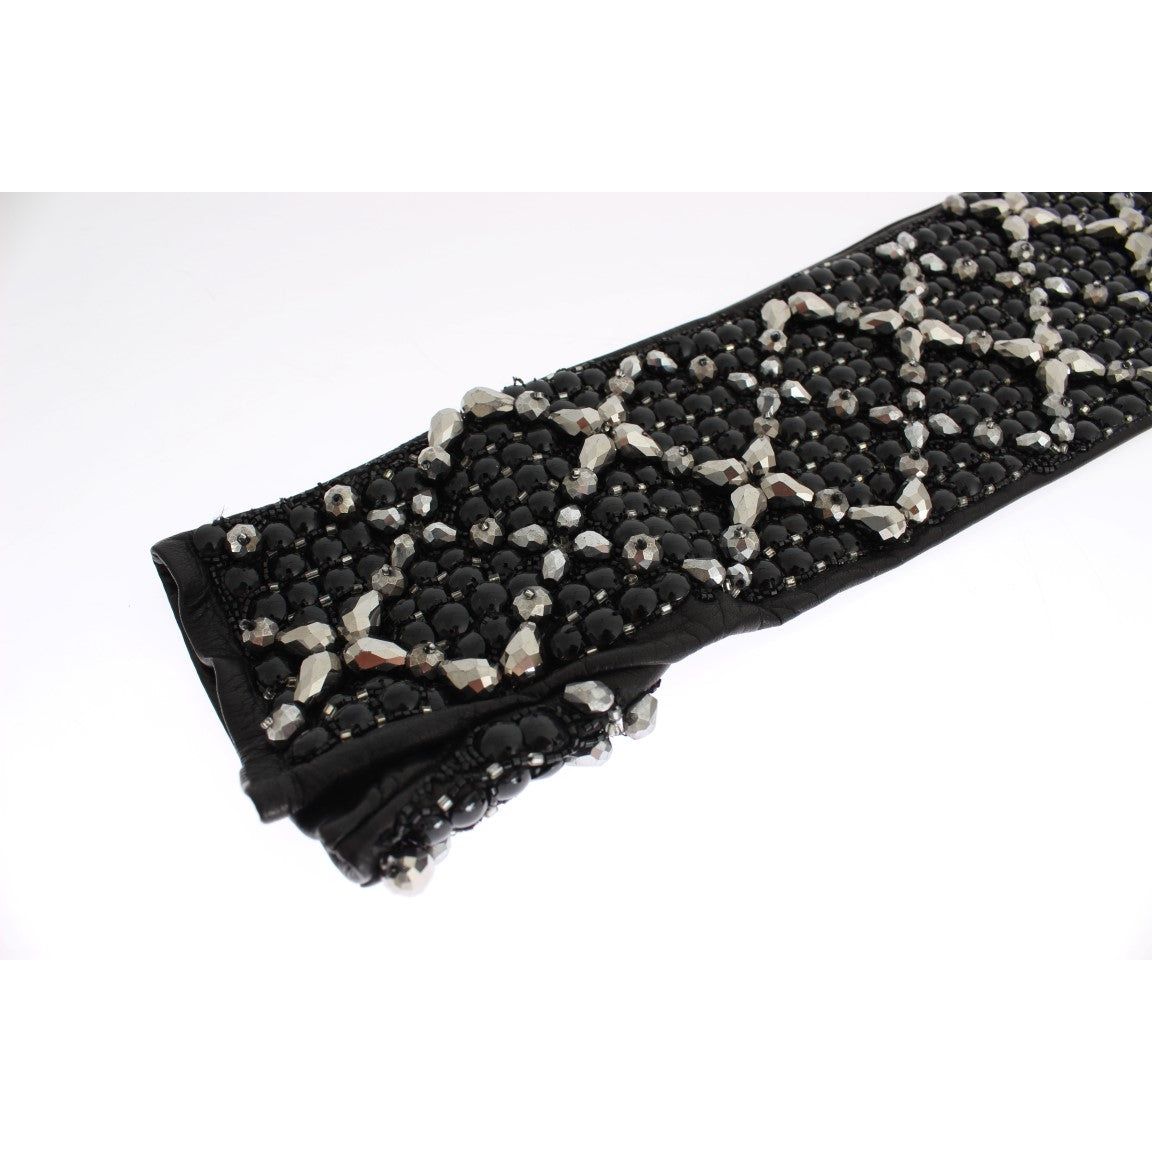 Dolce & Gabbana Elegant Black Crystal Beaded Leather Gloves black-leather-crystal-beaded-finger-free-gloves